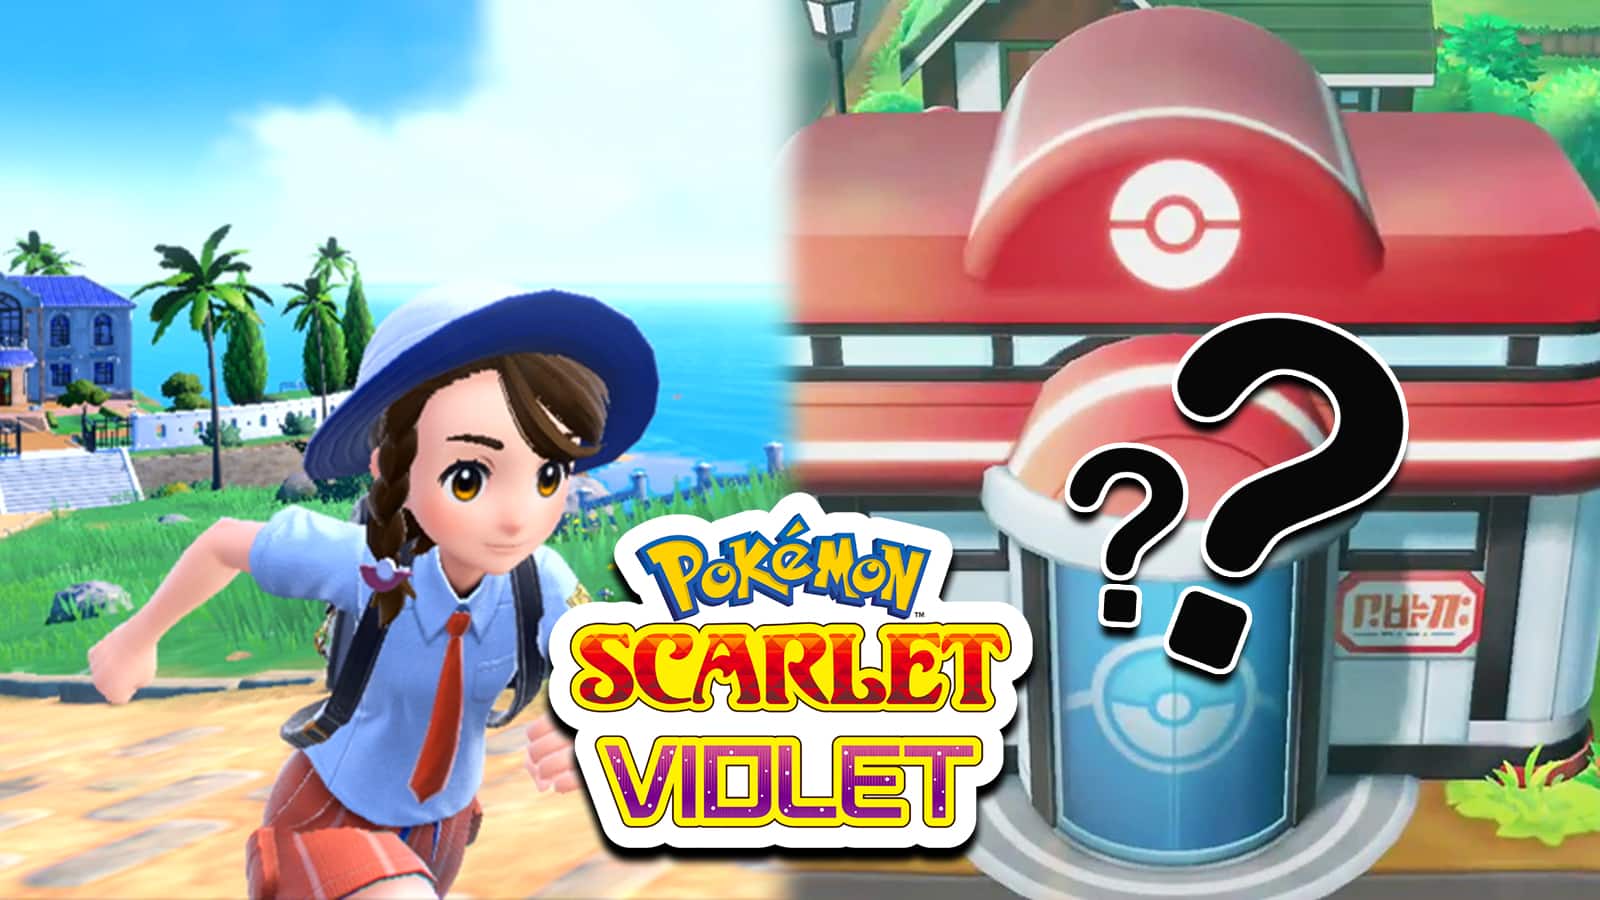 Pokemon Scarlet & Violet protagonist next to Pokemon Lets Go Pokemon Center.